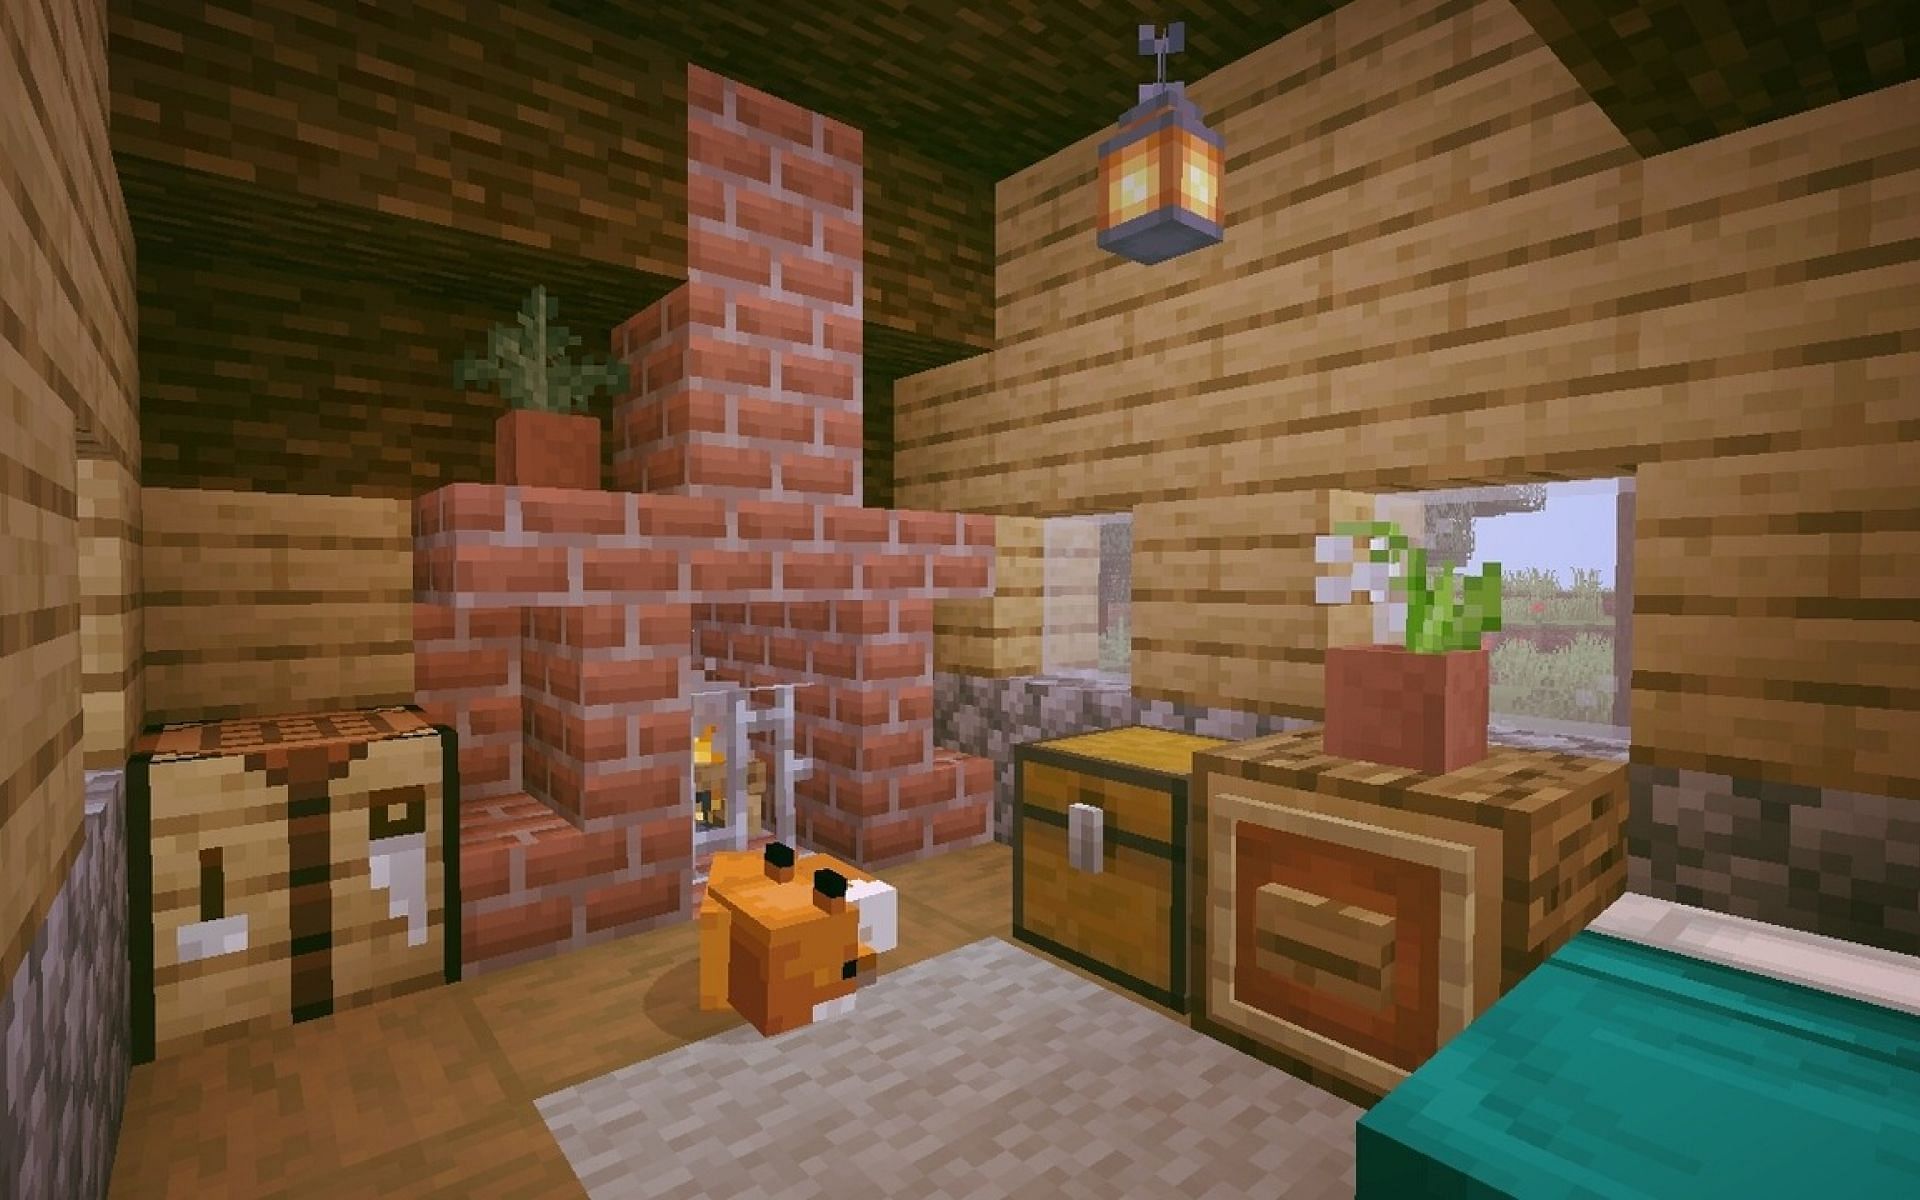 Interior decoration (Image via Minecraft)